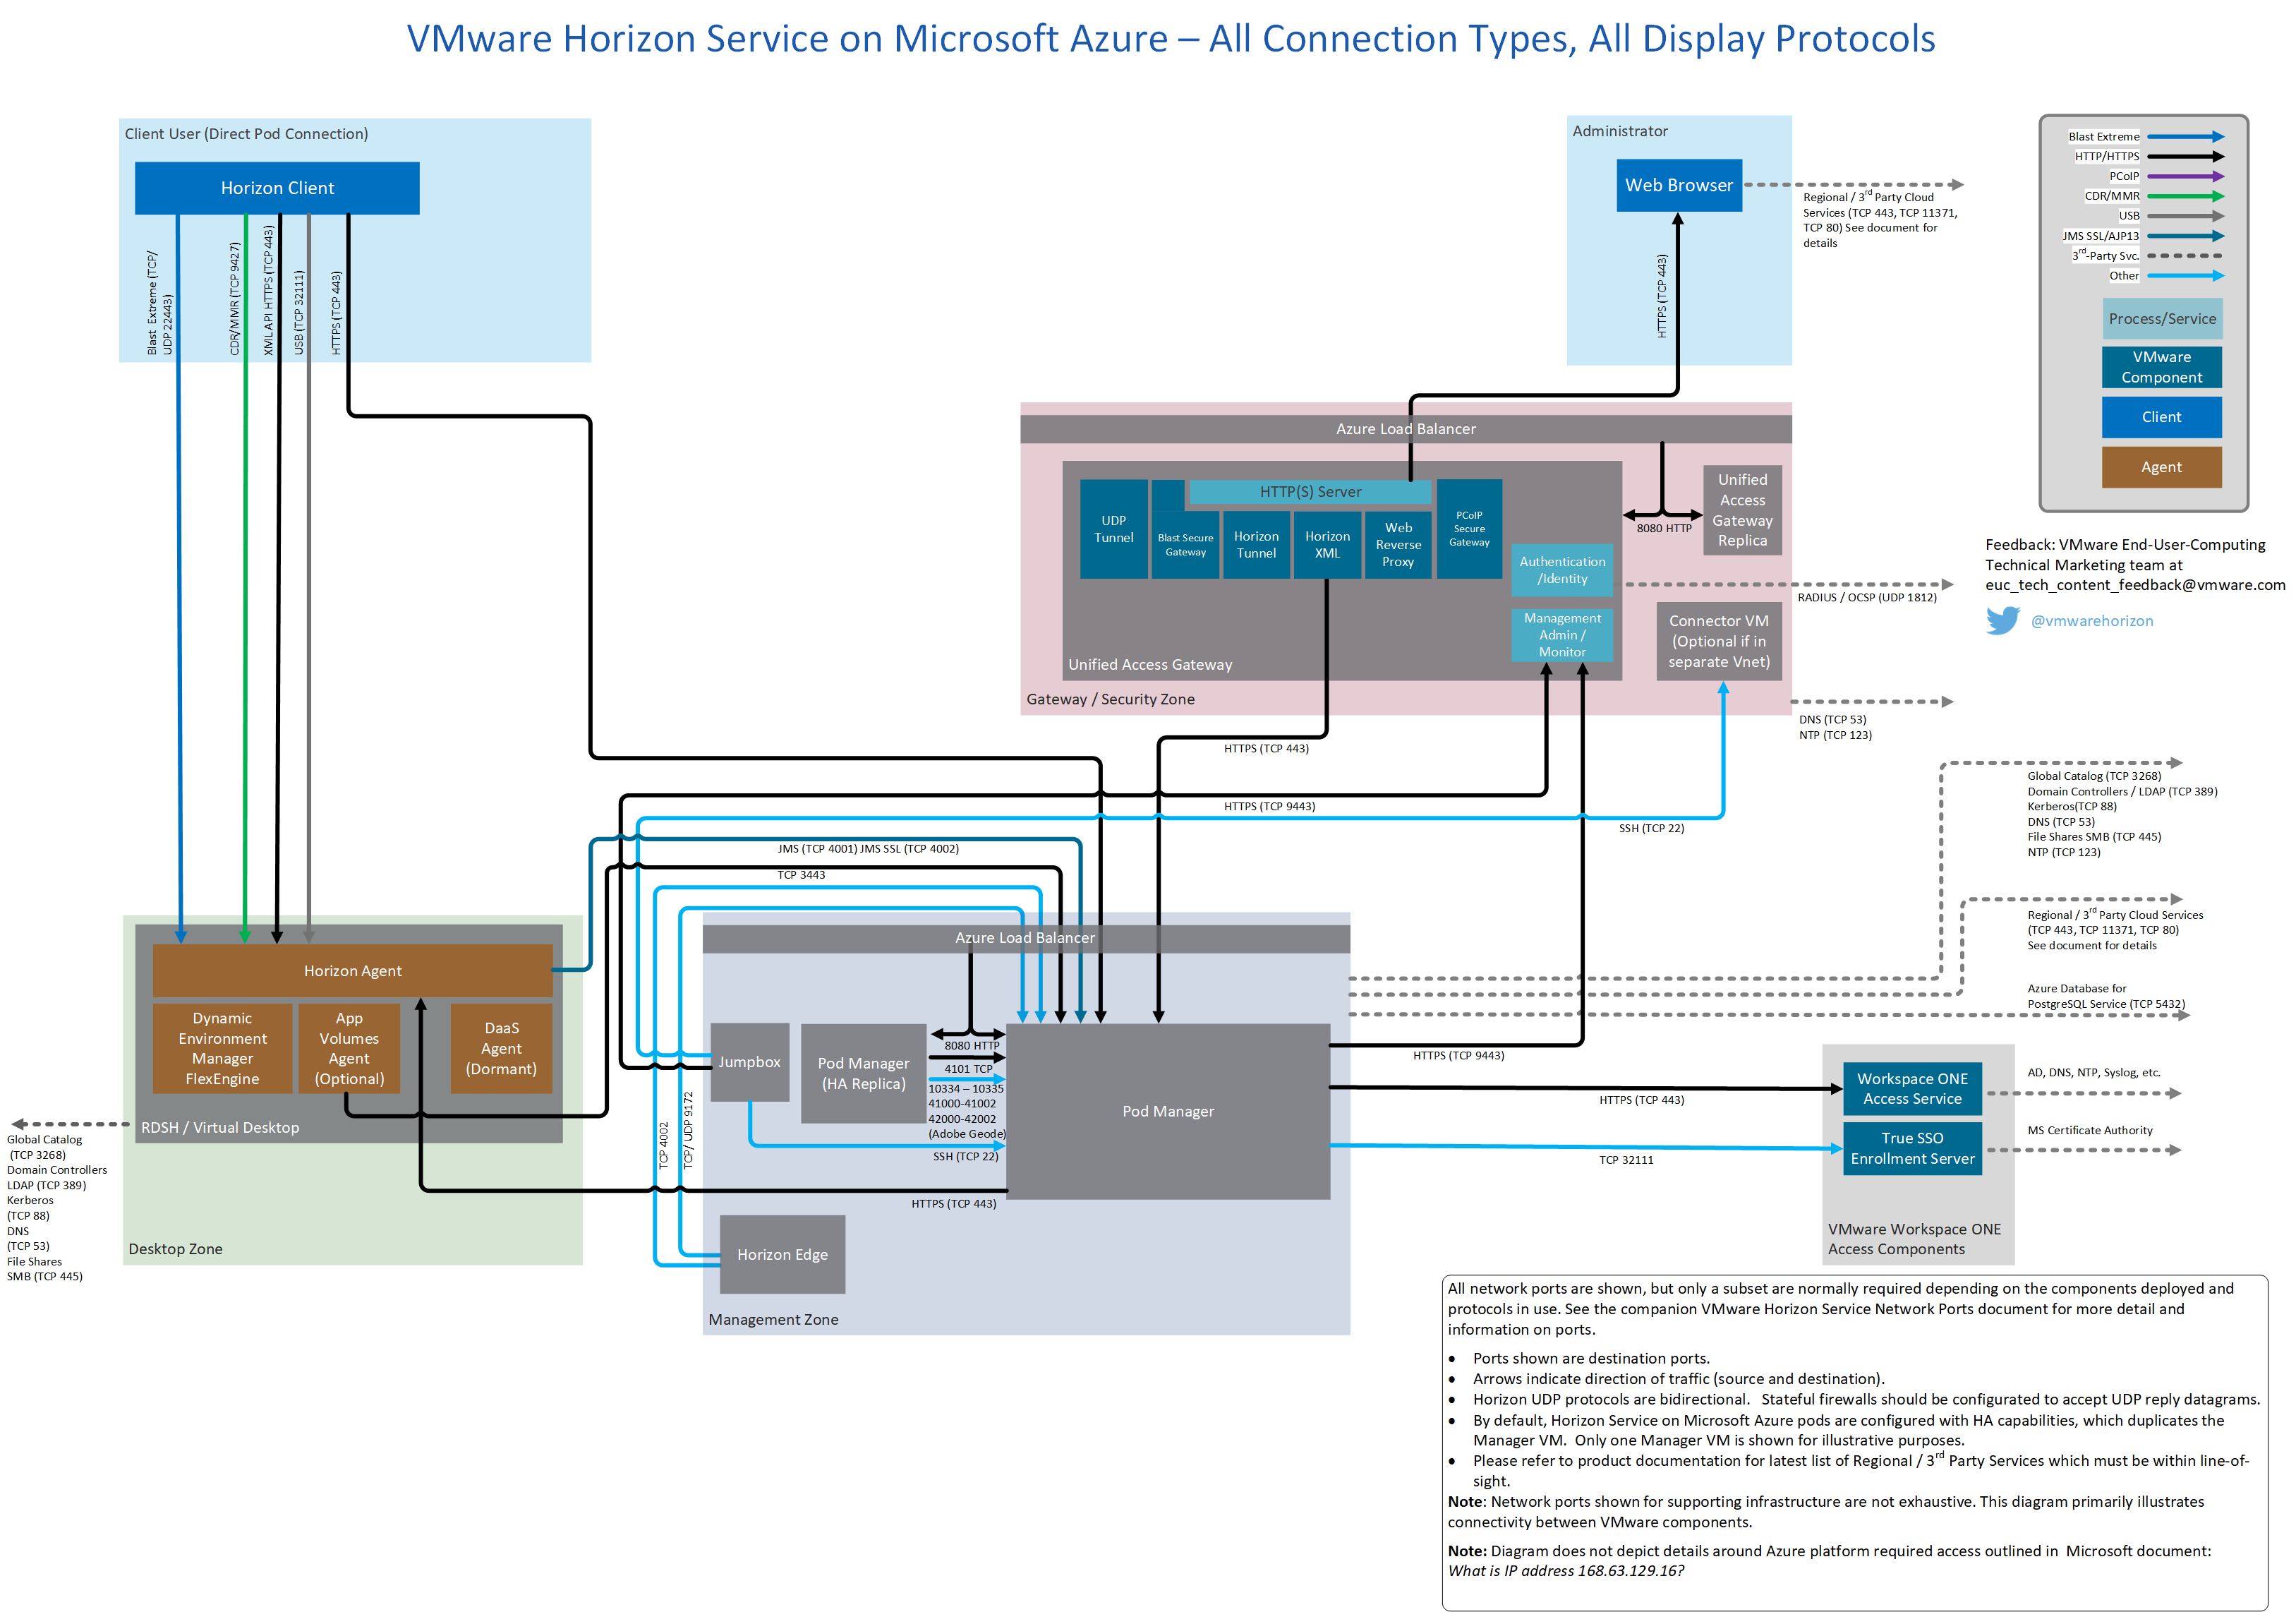 VMware Horizon Cloud Service on Microsoft Azure Network Ports ...